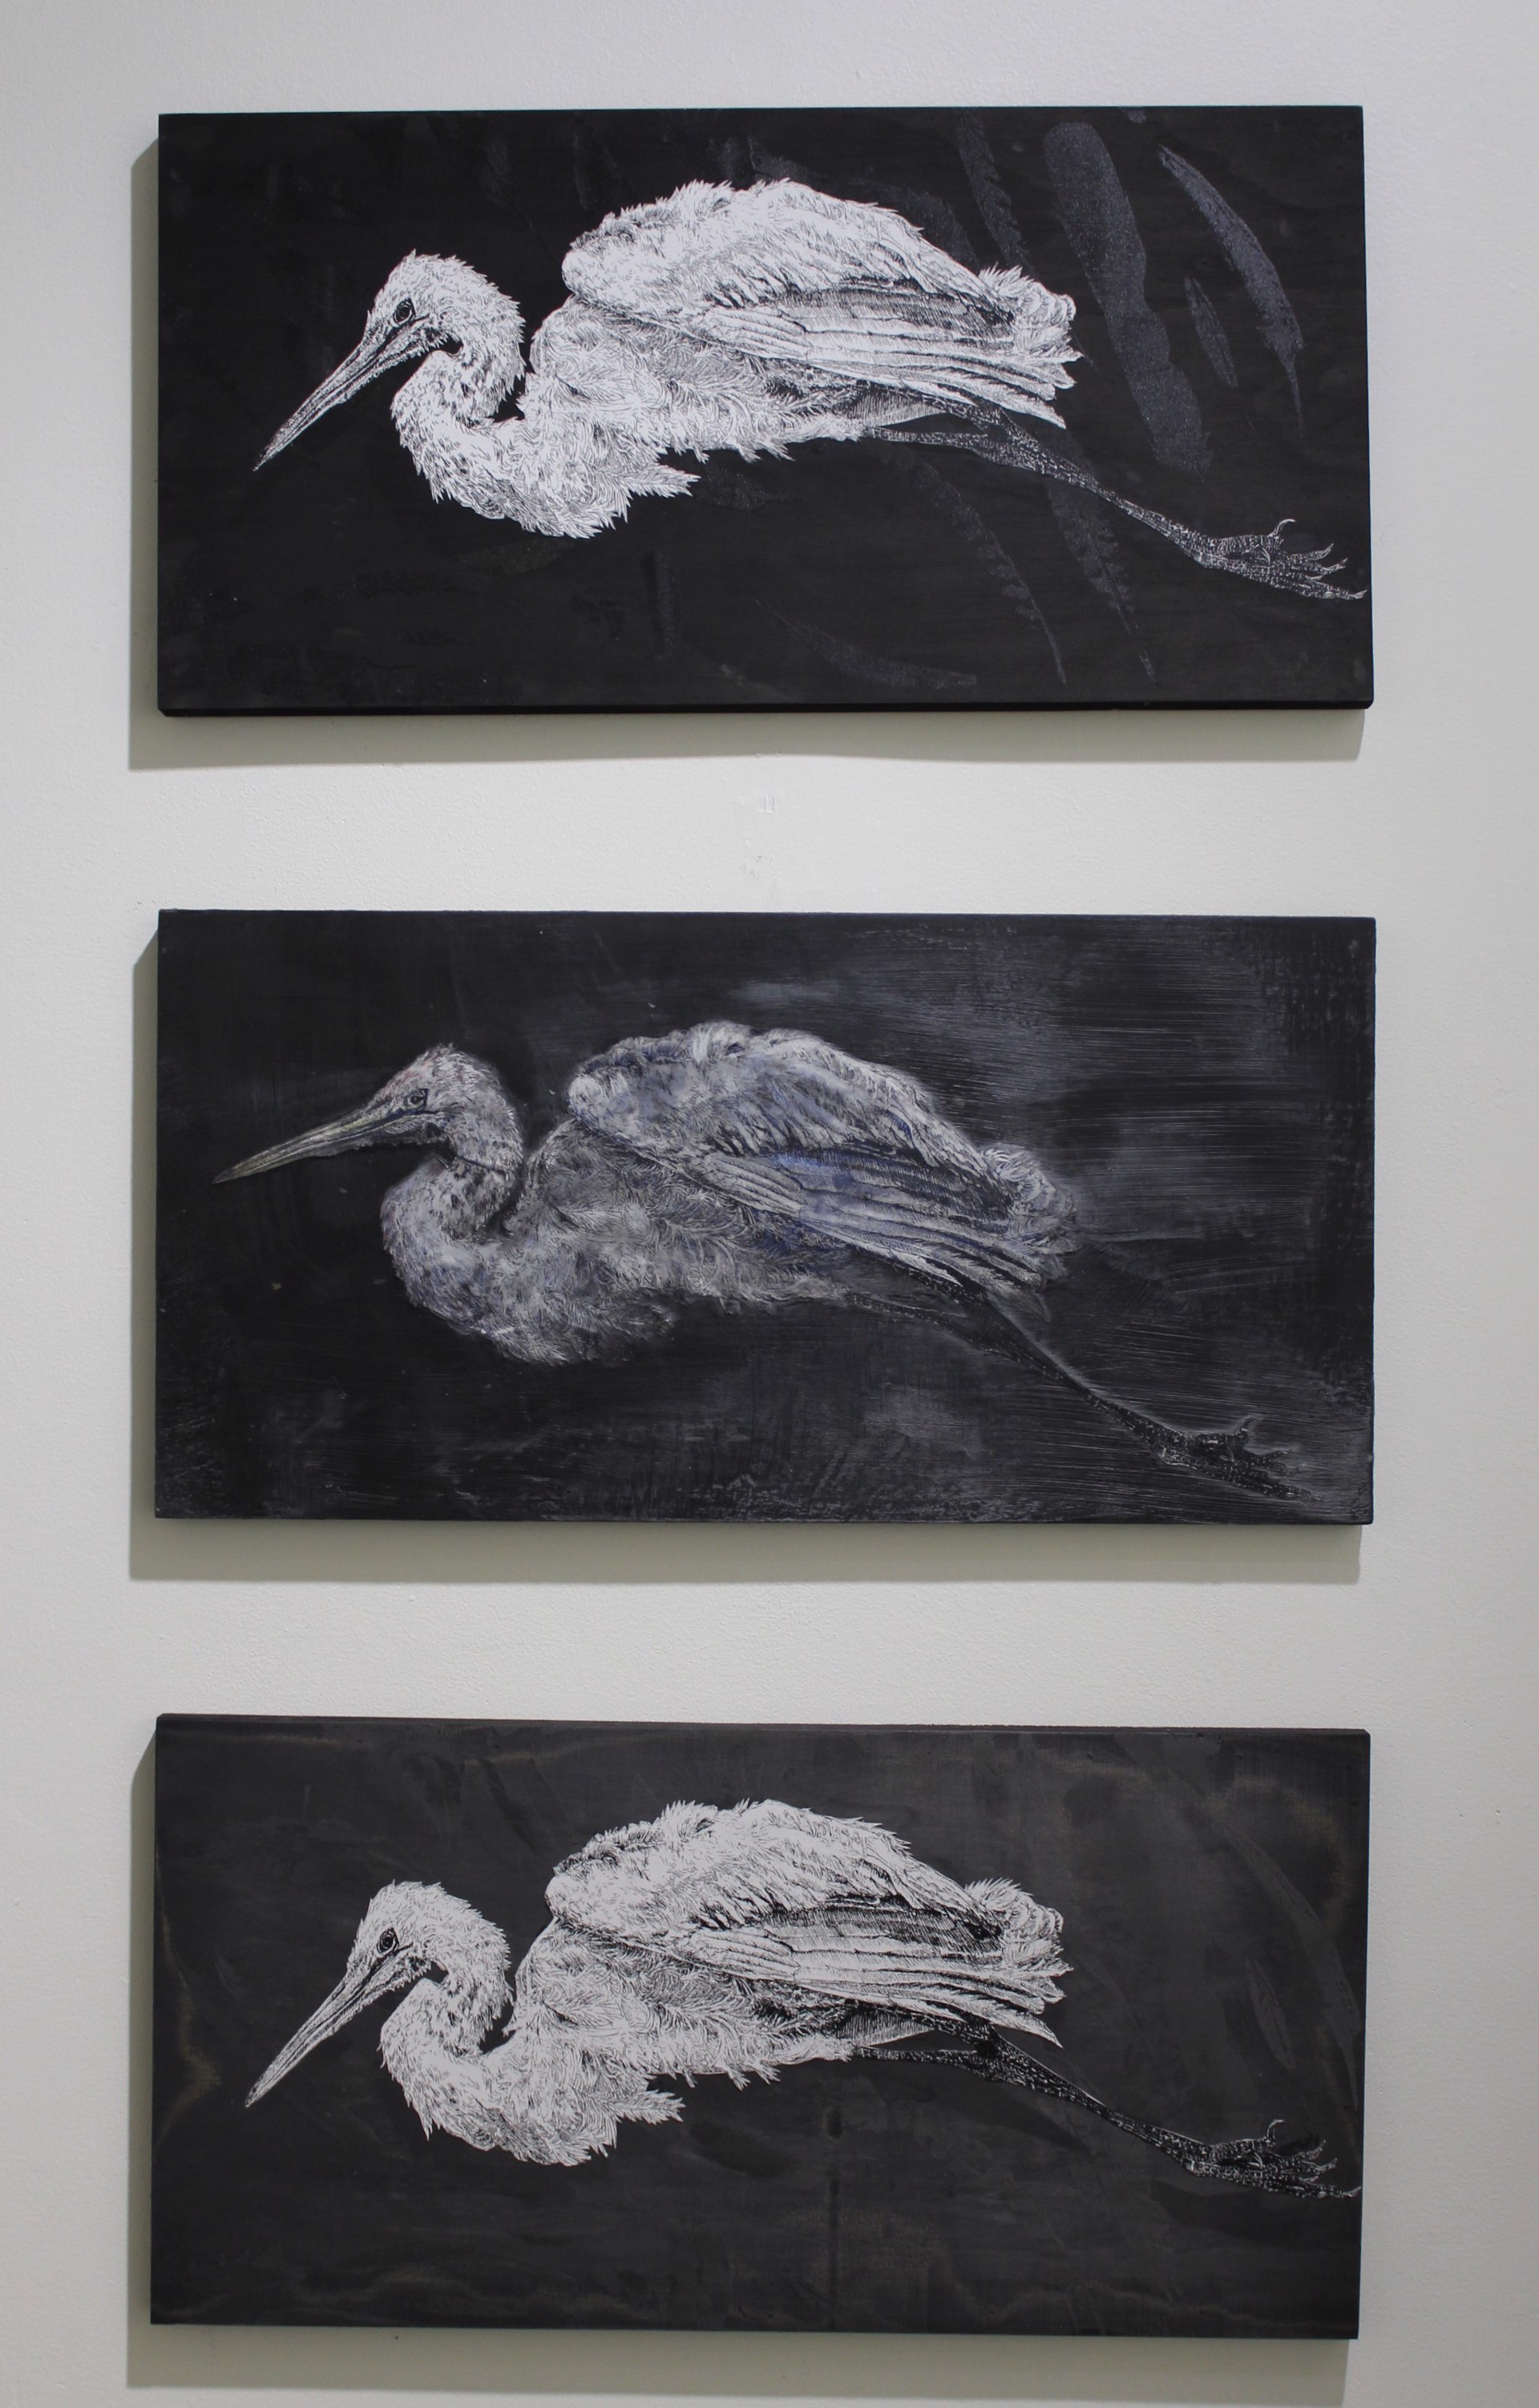 Egret 1 by Pippin Frisbie-Calder